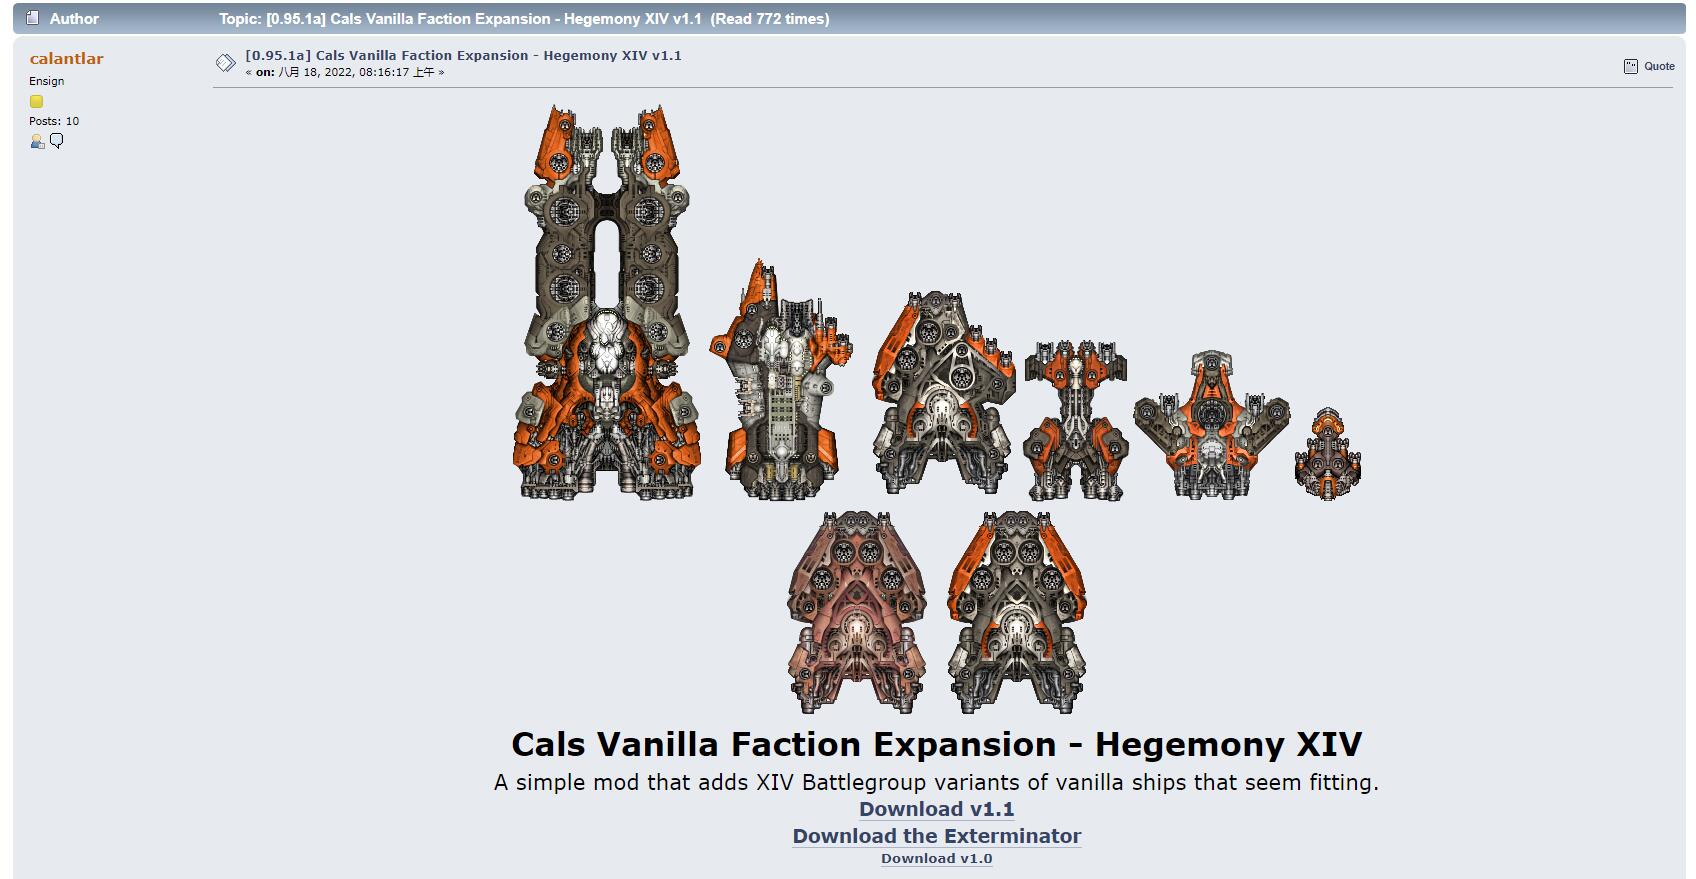 Cals Vanilla Faction Expansion - Hegemony XIV.jpg